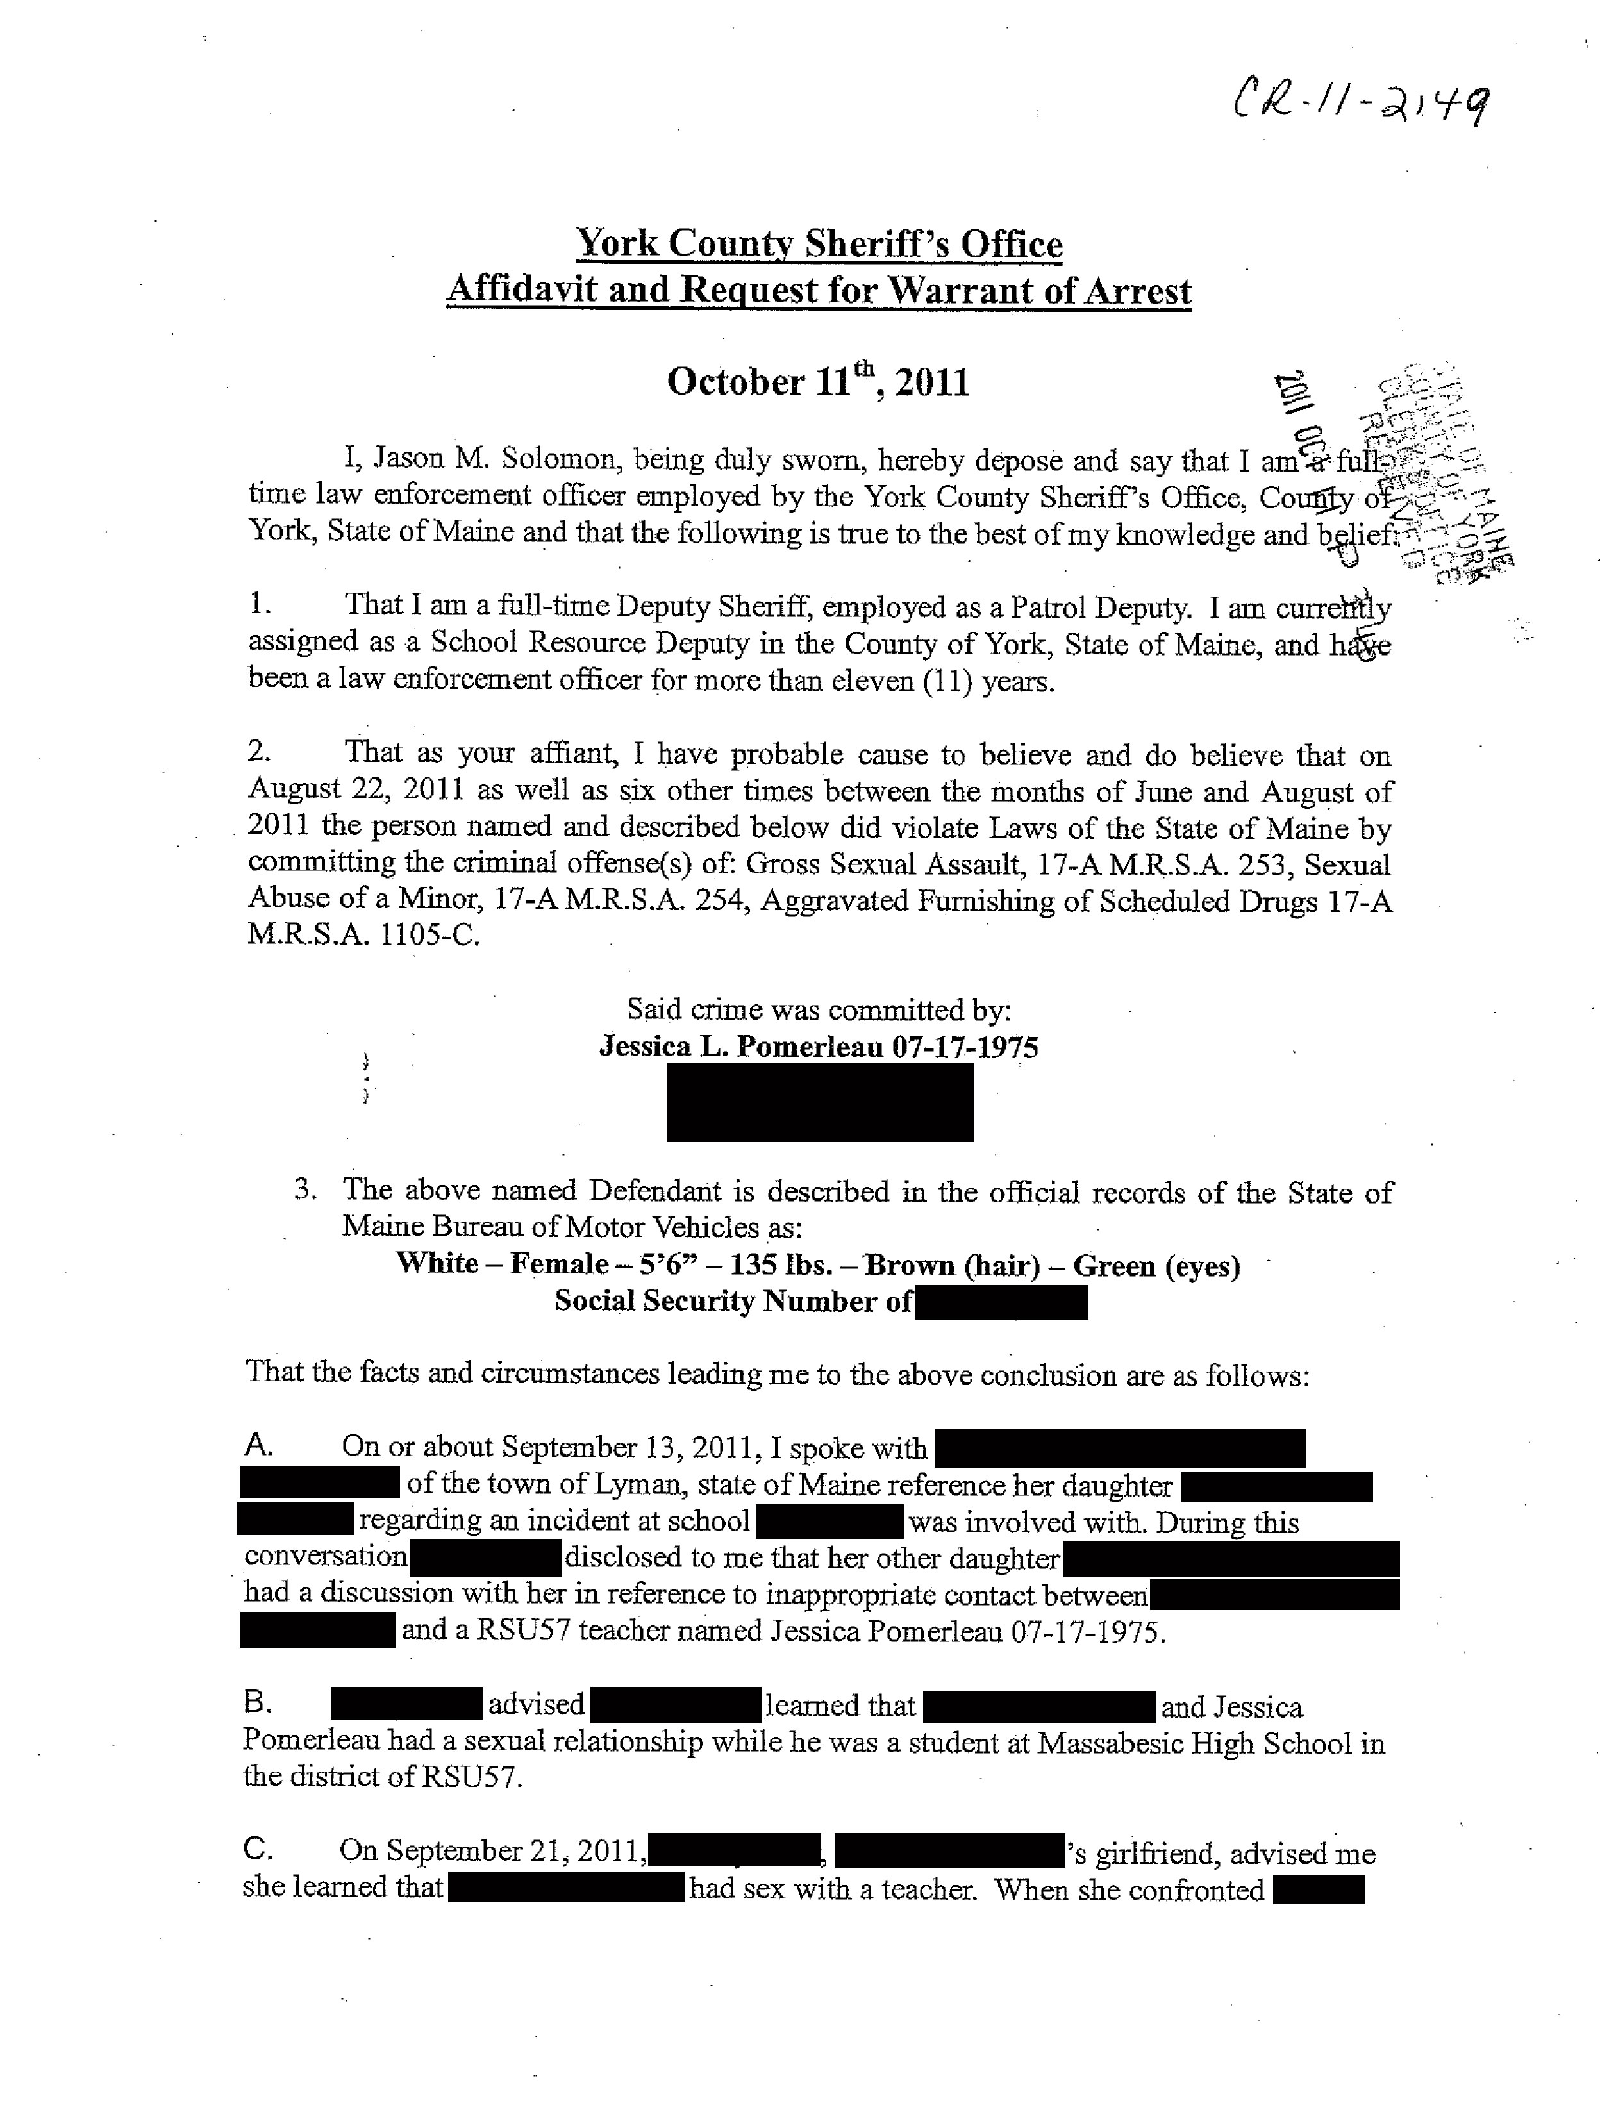 Copy of pomerleau jessica arrest affidavit1.png